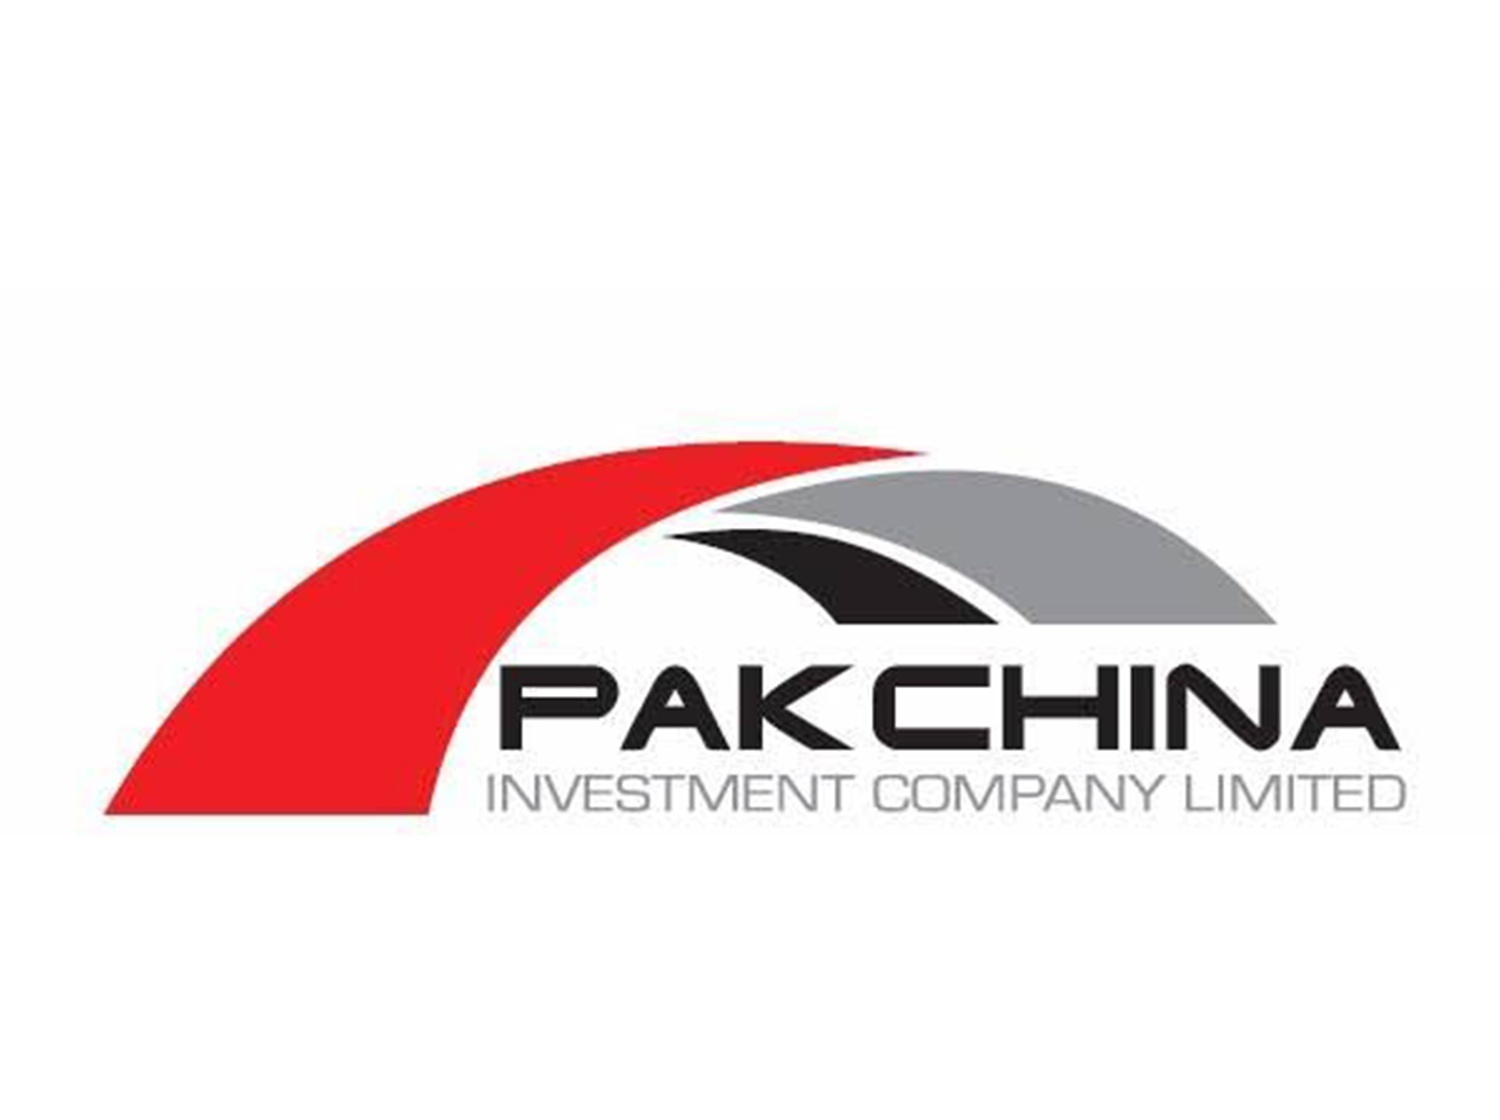 Pak china investment company pfm client